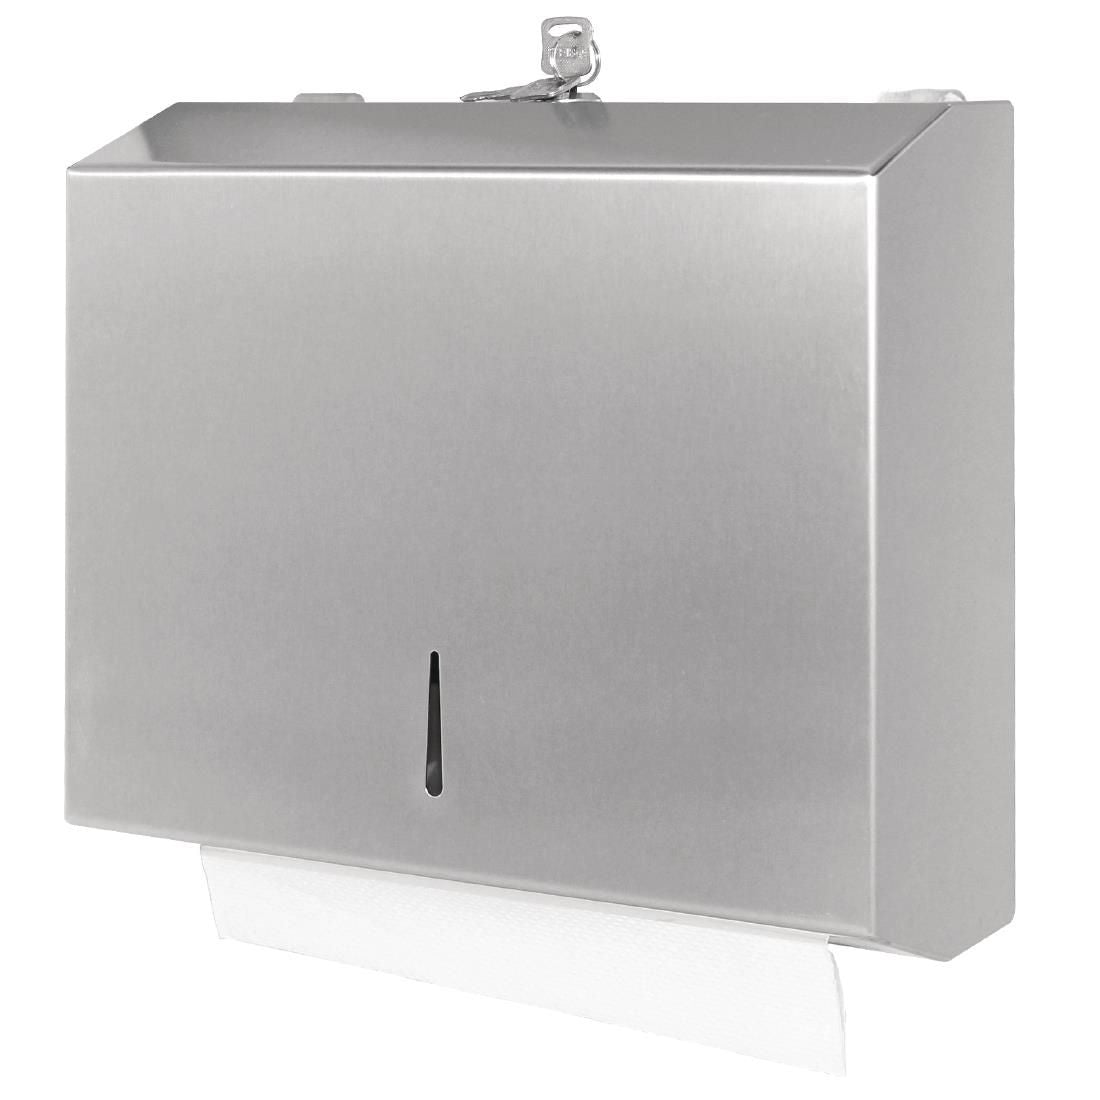 Jantex Stainless Paper Towel Dispenser JD Catering Equipment Solutions Ltd